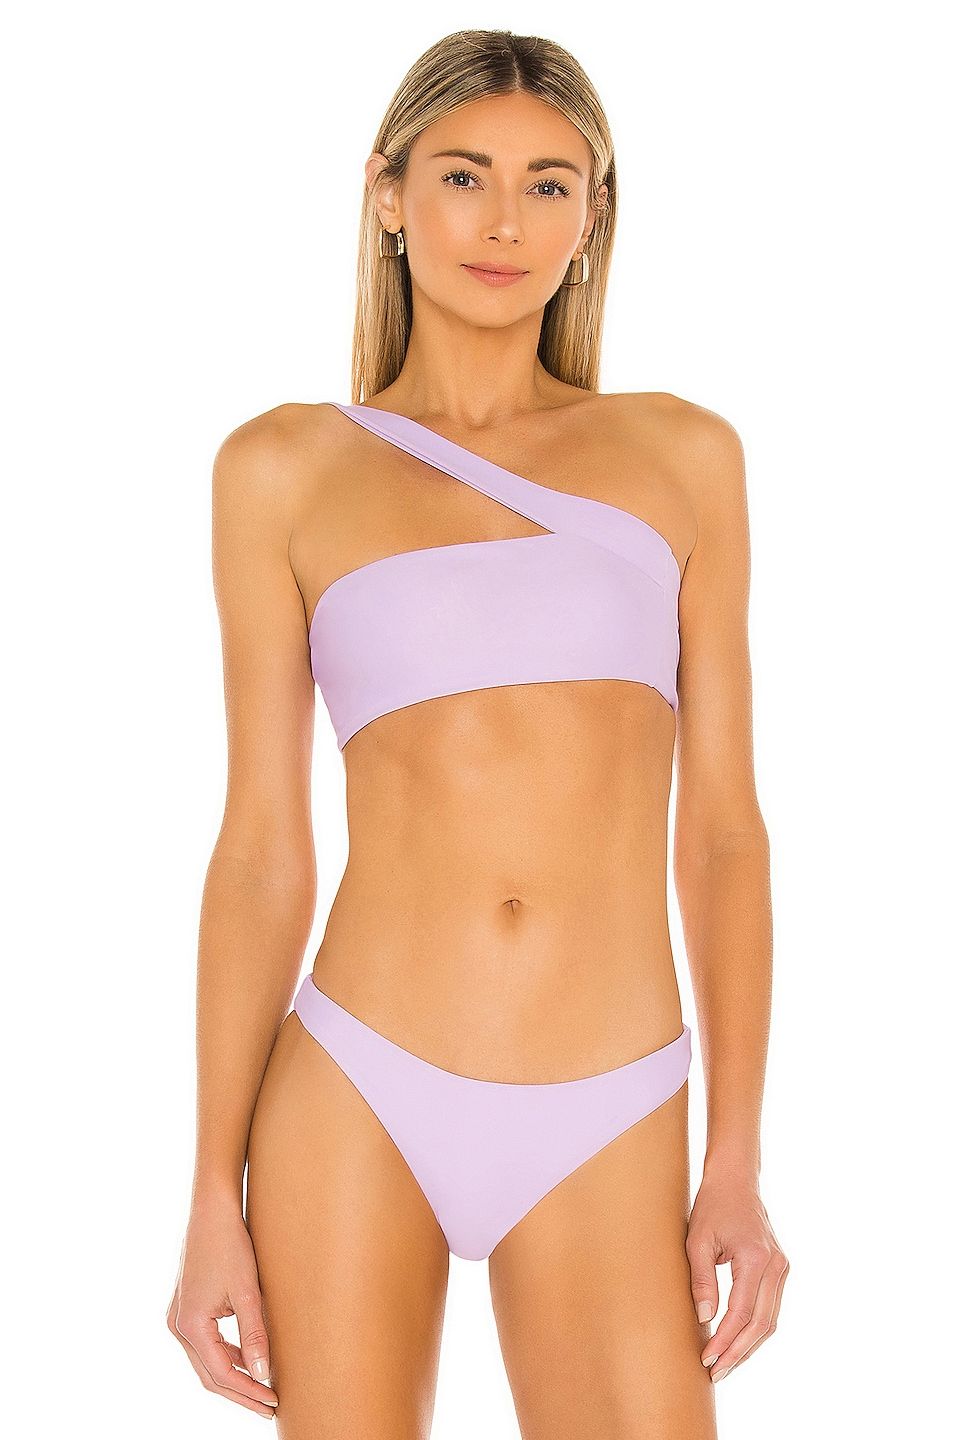 Women Sexy Bikini Small Breast Swimsuit Two Piece Bikini Swimsuits